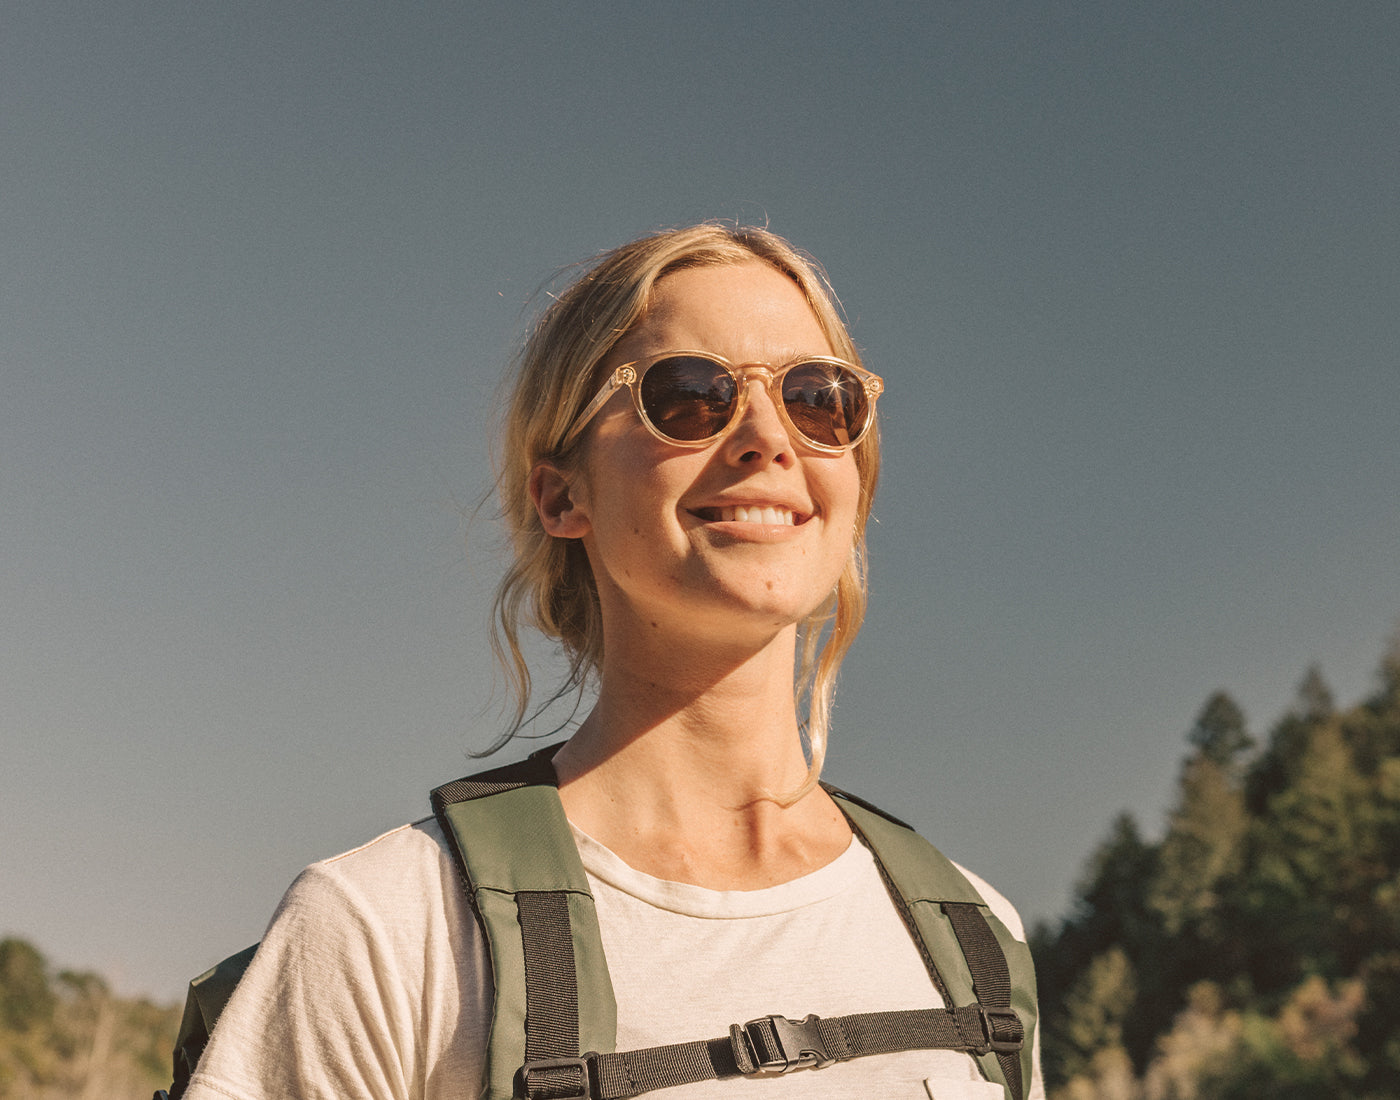  girl backpacking wearing sunski dipsea sunglasses